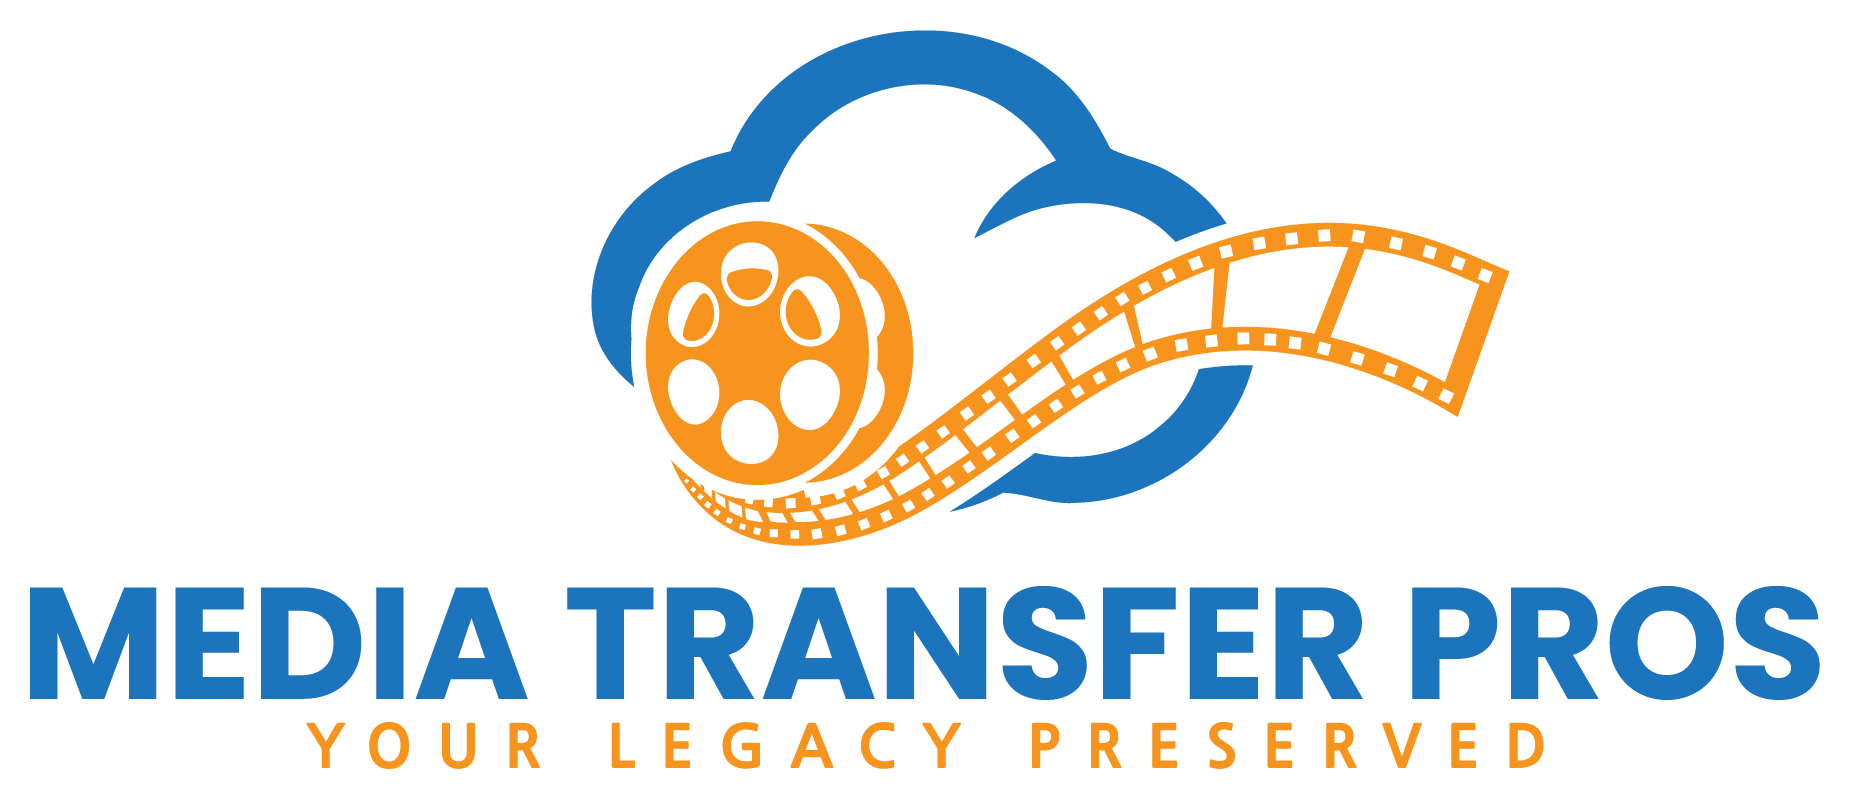 Media Transfer Pros Logo - mediatransferpros.com